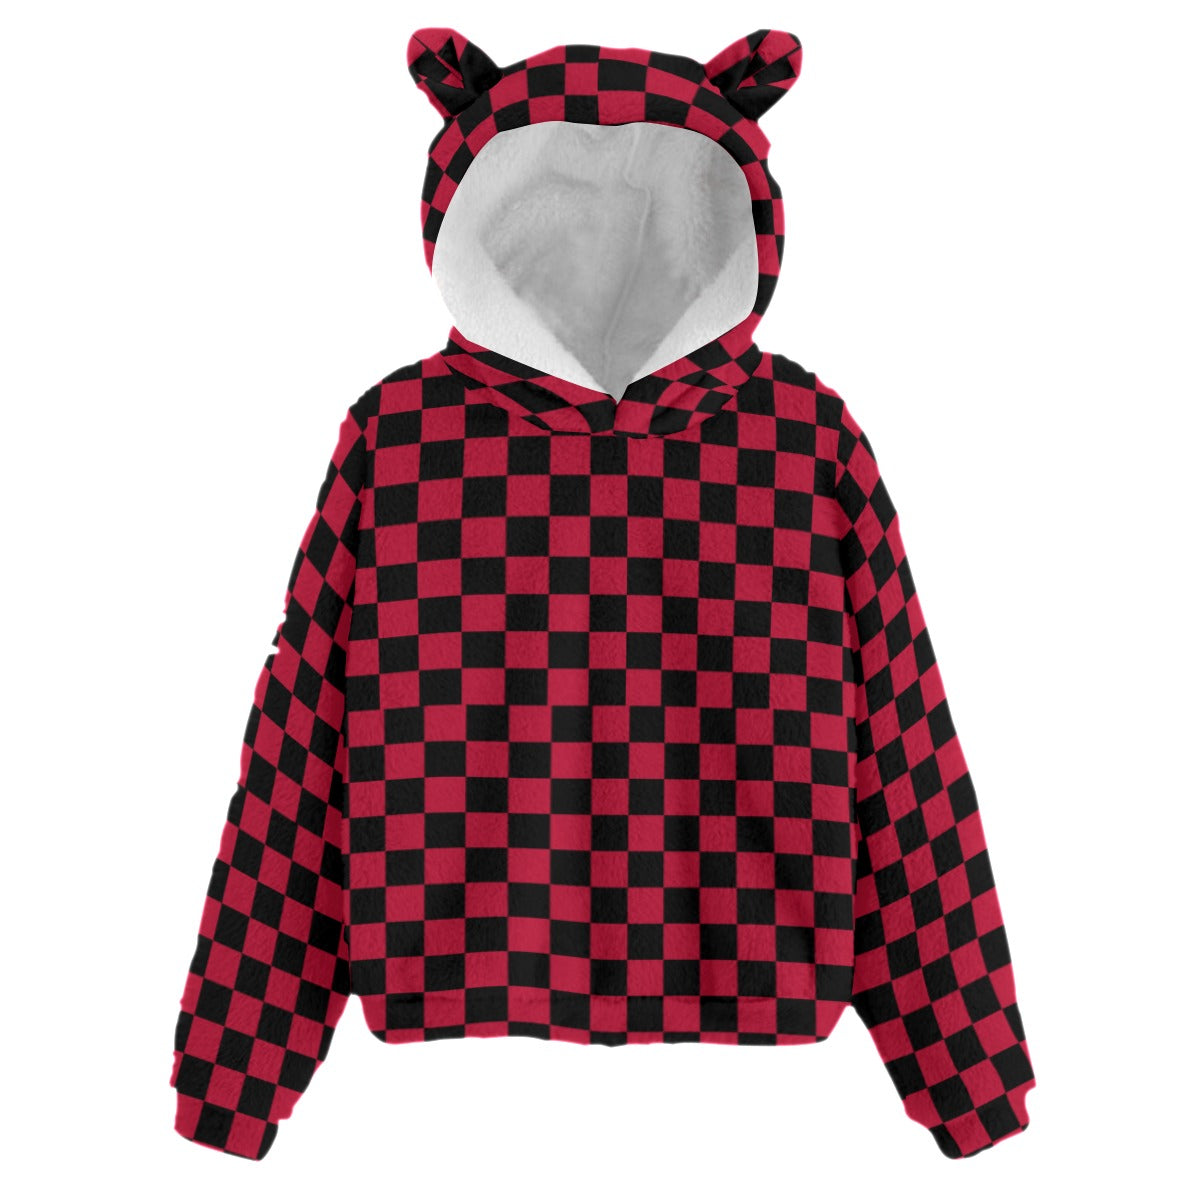 Kid’s Checkerboard Borg Fleece Sweatshirt With Ears